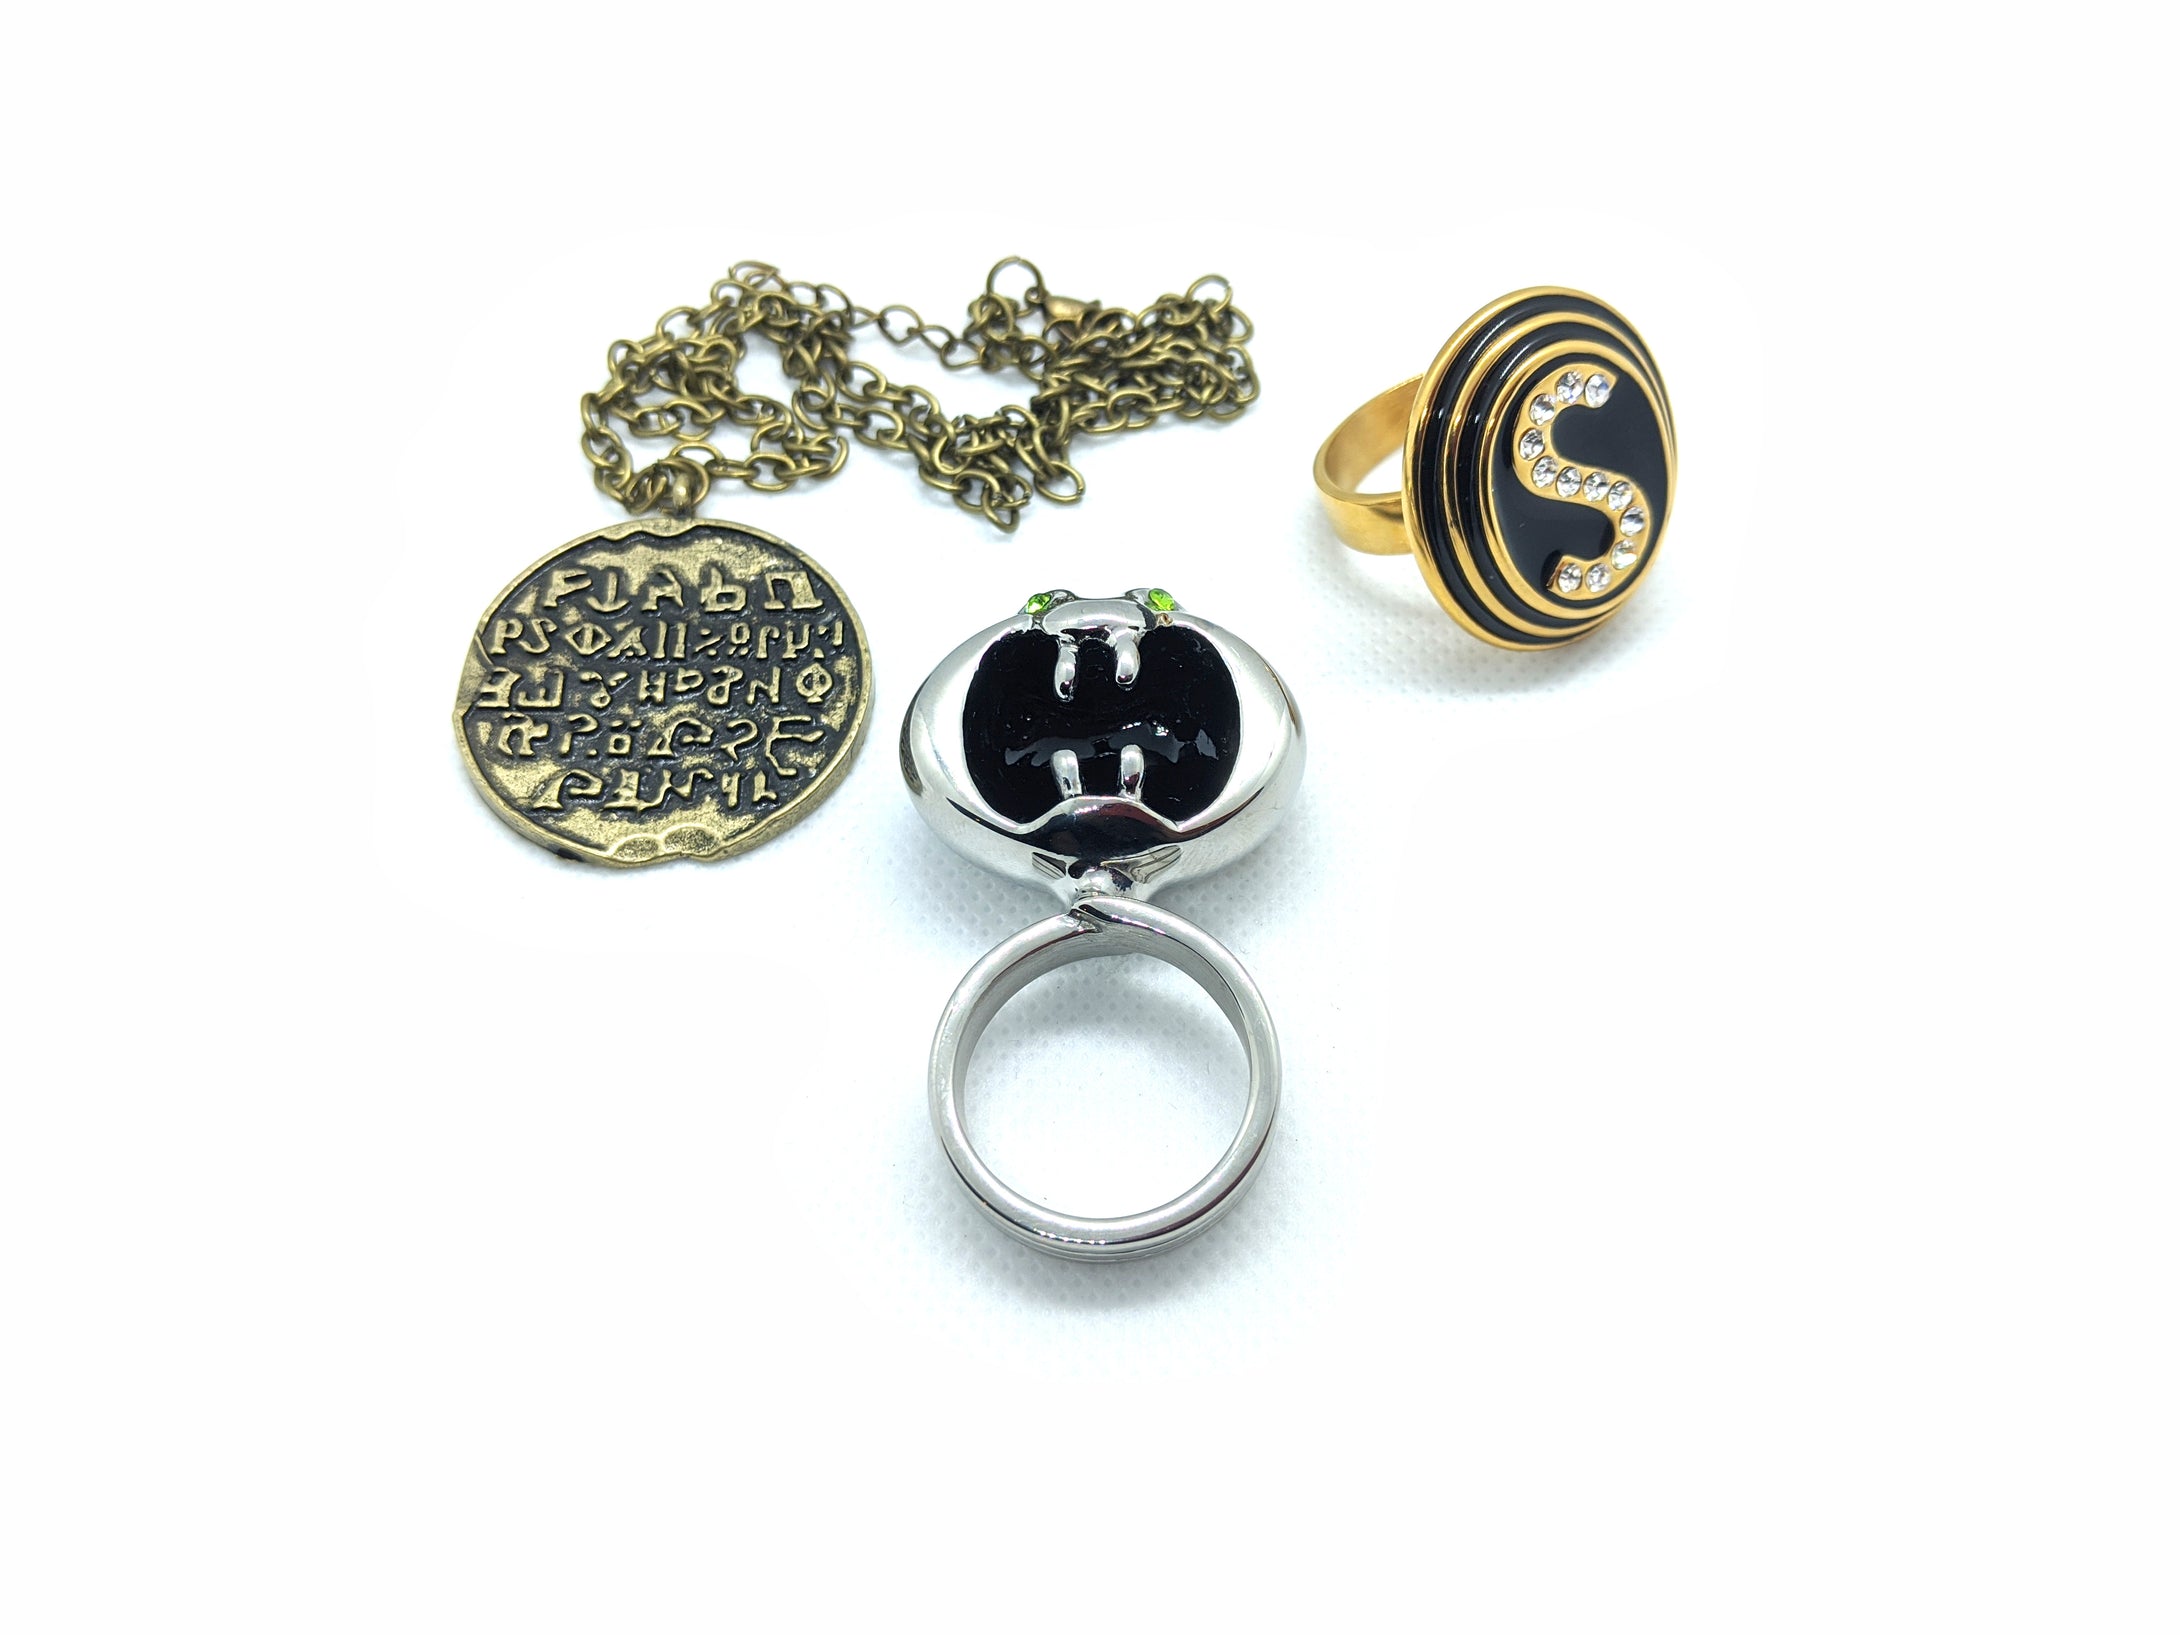 Spaceballs complete jewelry set! Dark Helmet Ring, Schwartz Ring, Necklace